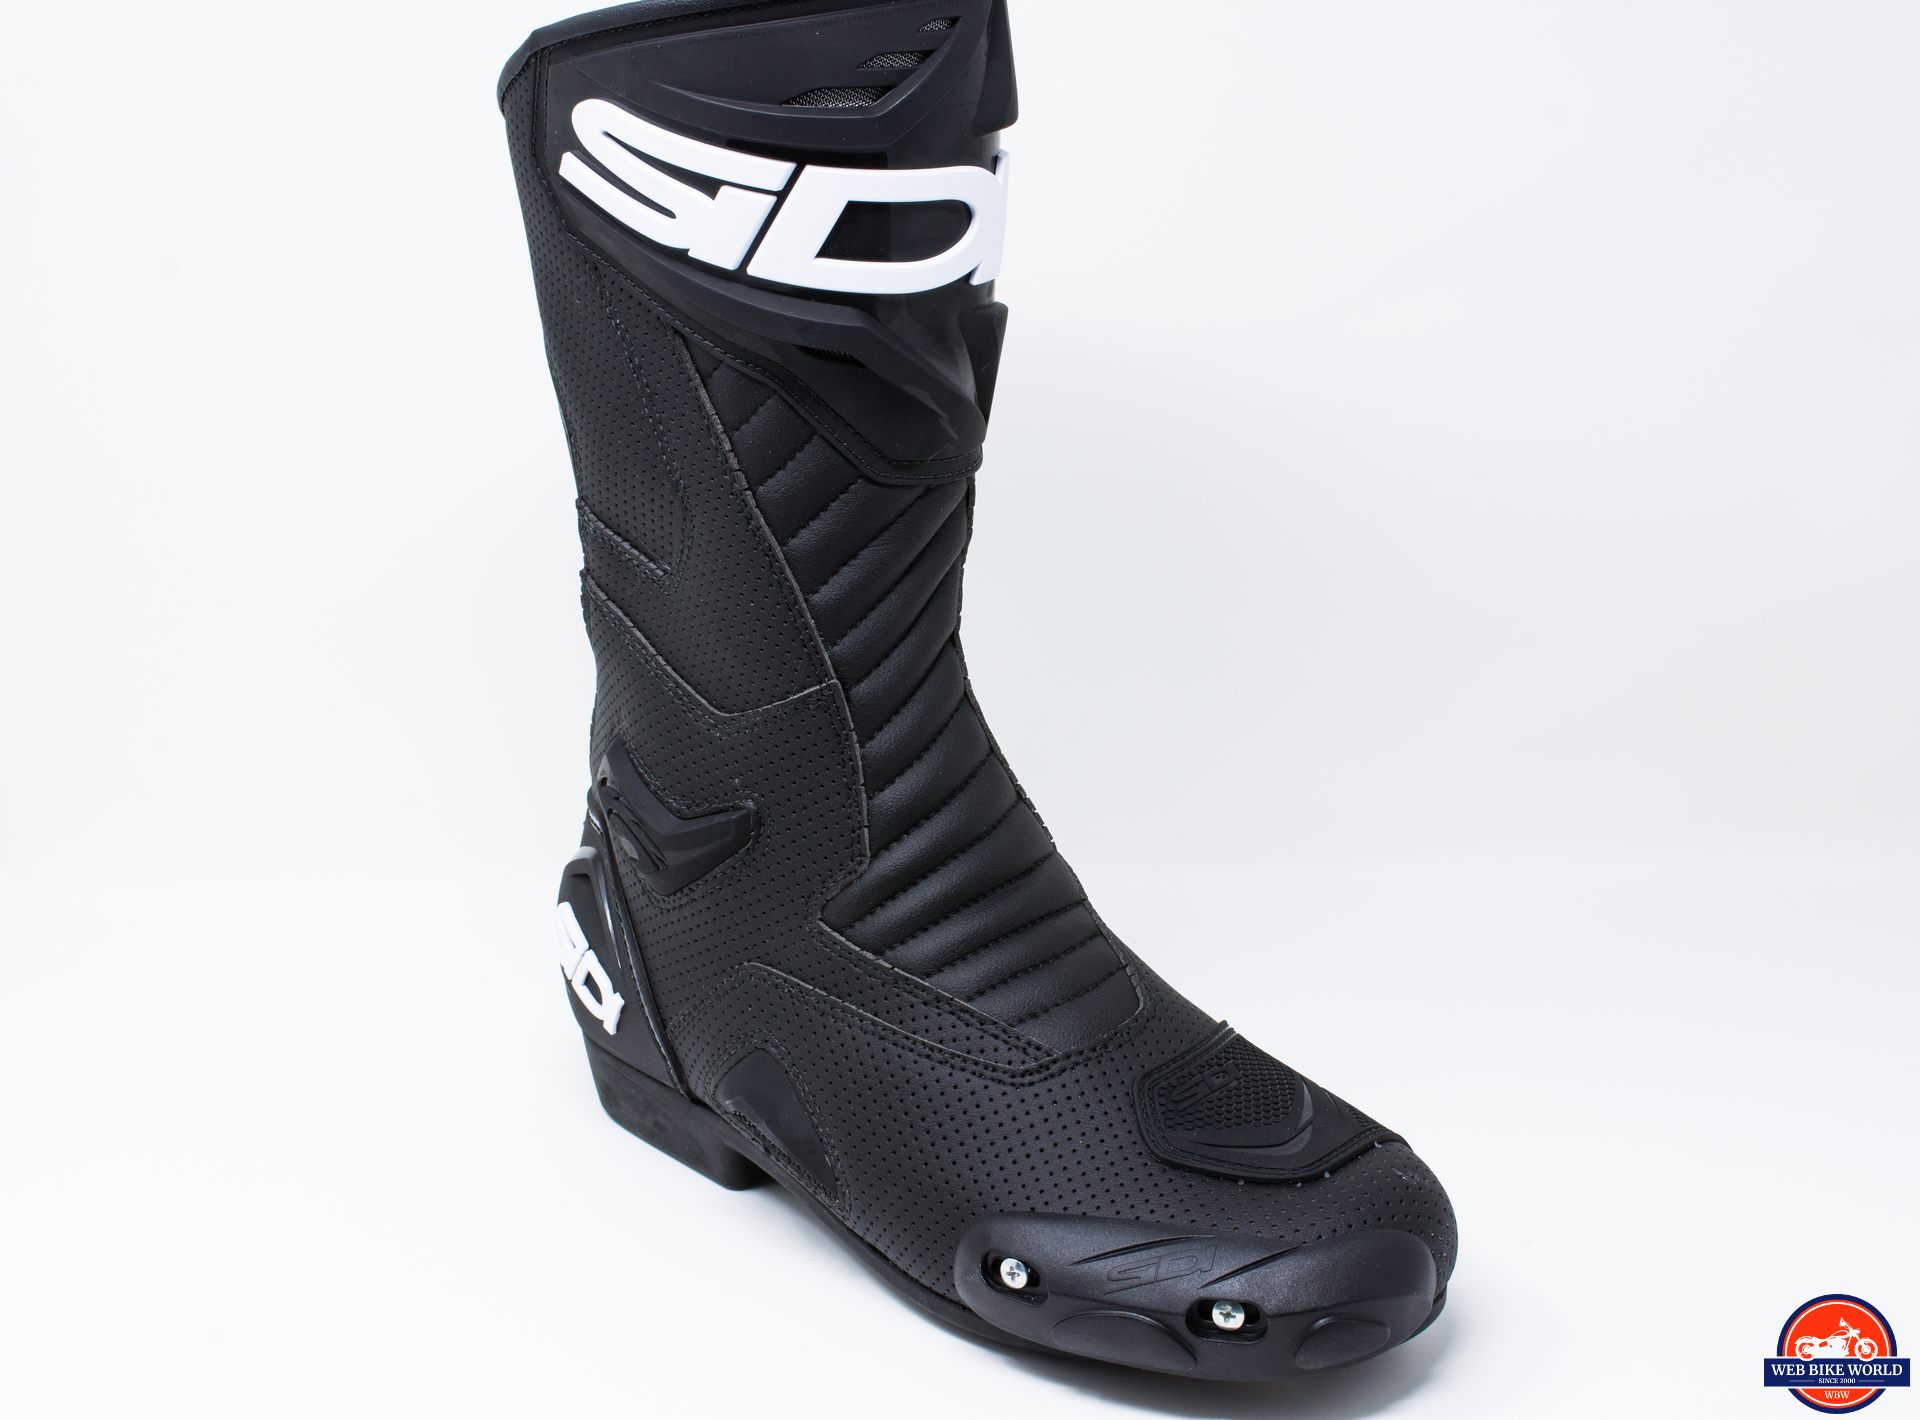 SIDI Performer Air Sport Boots Review | webBikeWorld